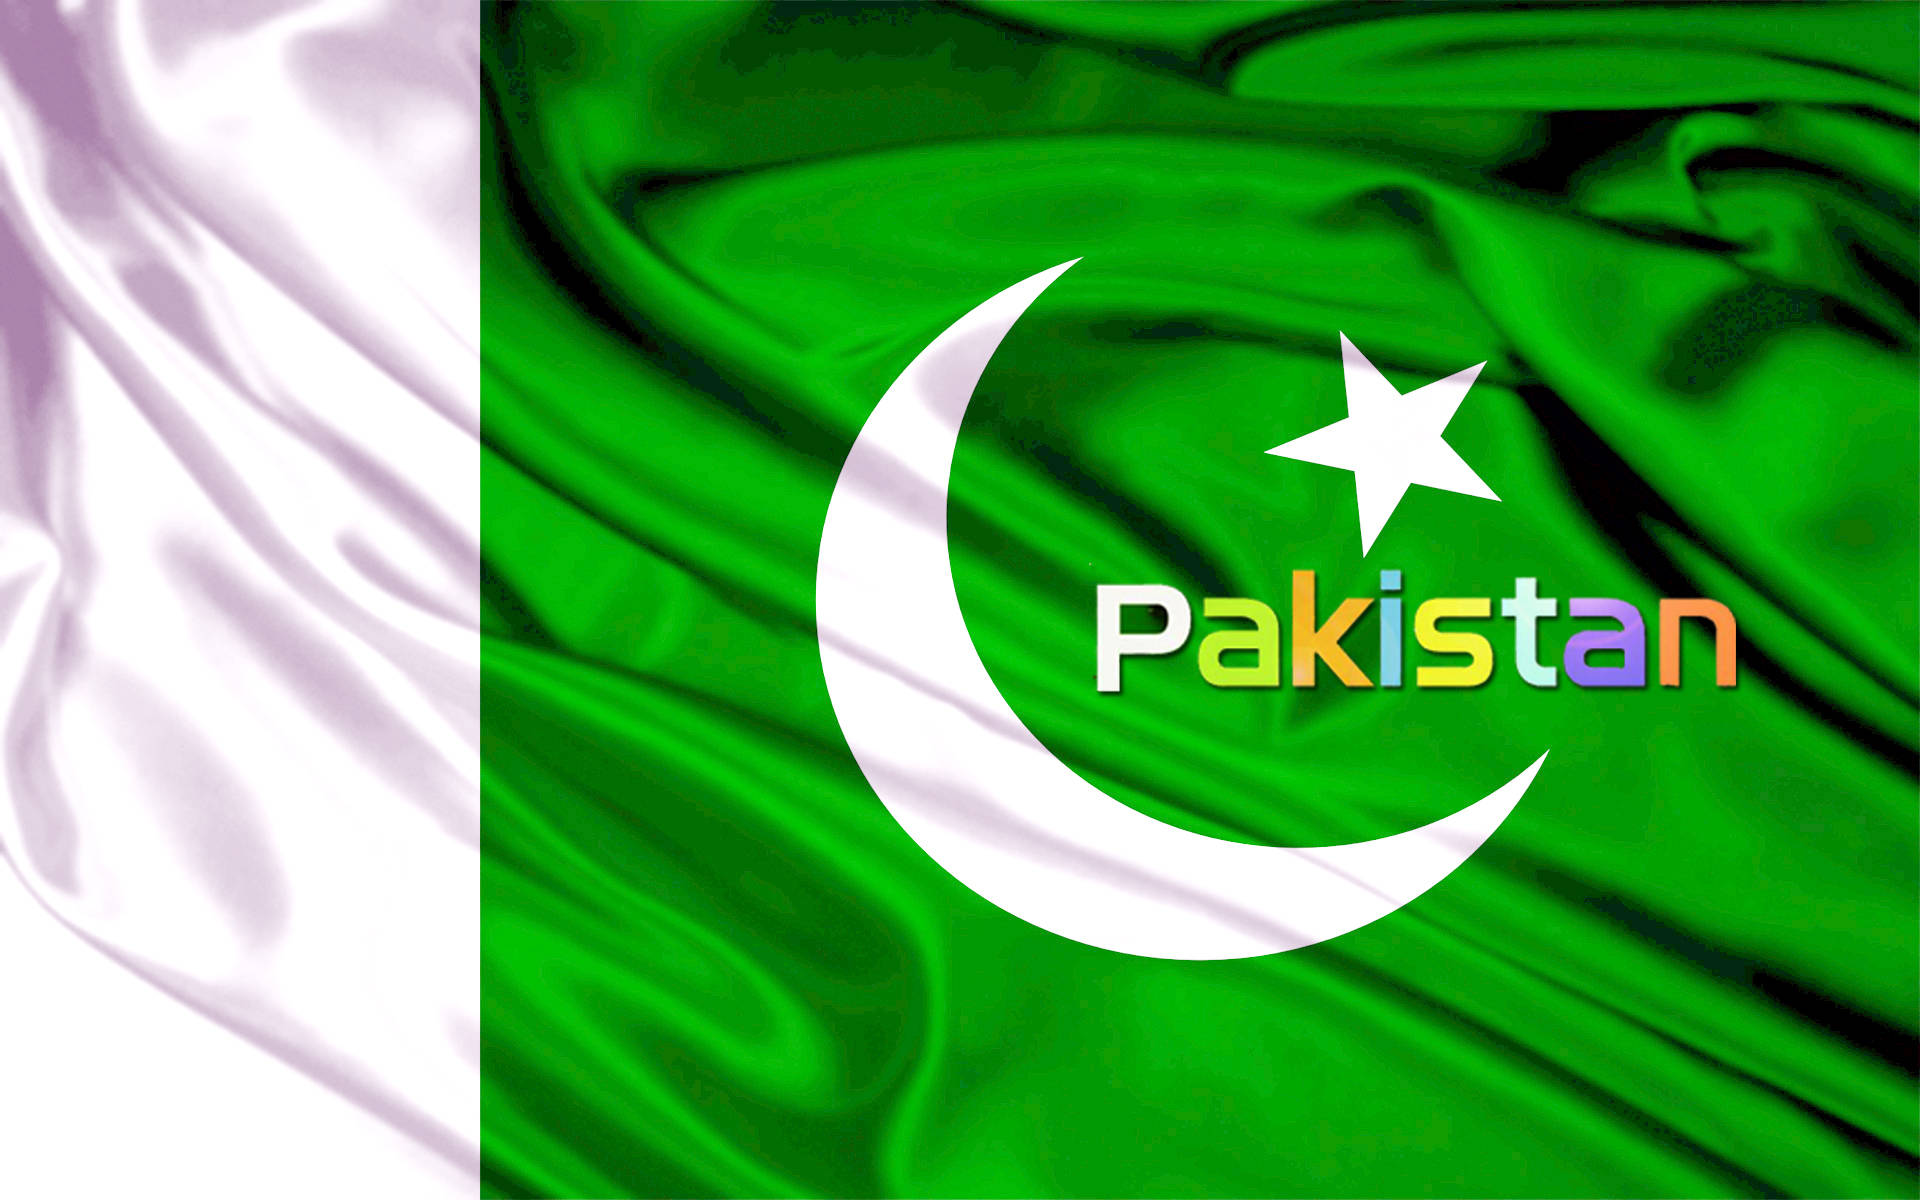 4400 Pakistani Flag Stock Photos Pictures  RoyaltyFree Images  iStock   Pakistani culture Pakistani ethnicity Pakistan independence day